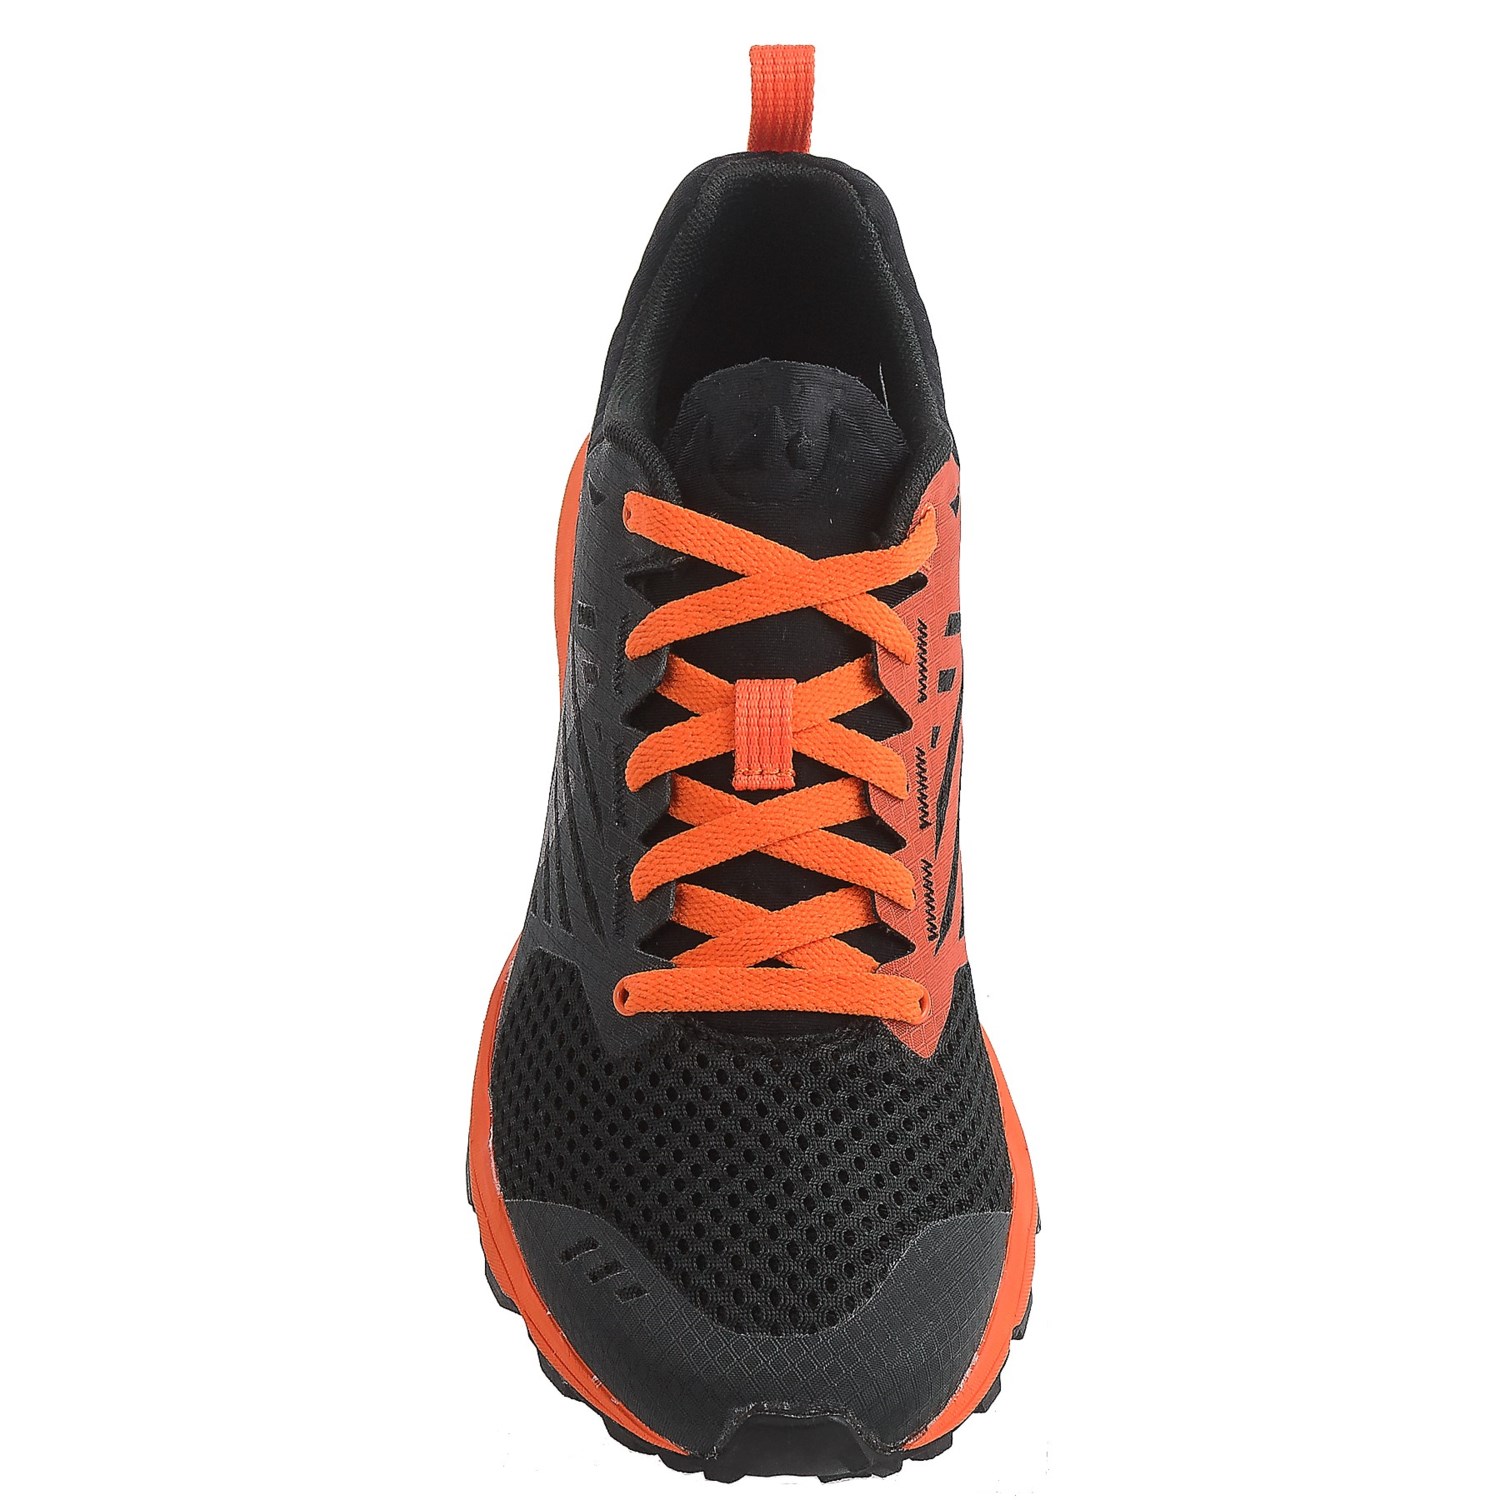 Merrell Dexterity Tough Mudder Trail Running Shoes (For Women) - Save 50%